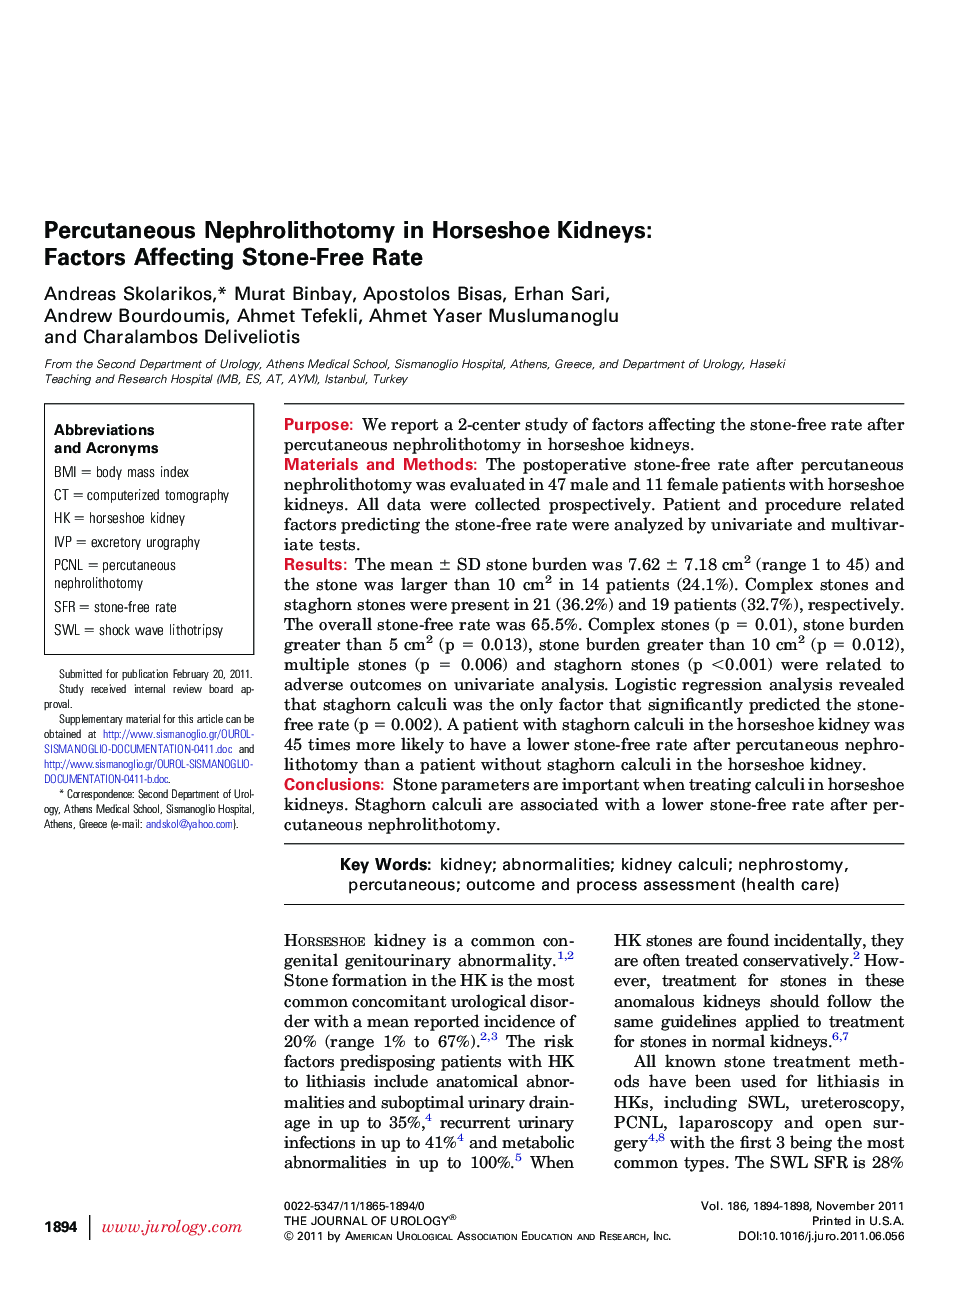 Percutaneous Nephrolithotomy in Horseshoe Kidneys: Factors Affecting Stone-Free Rate 